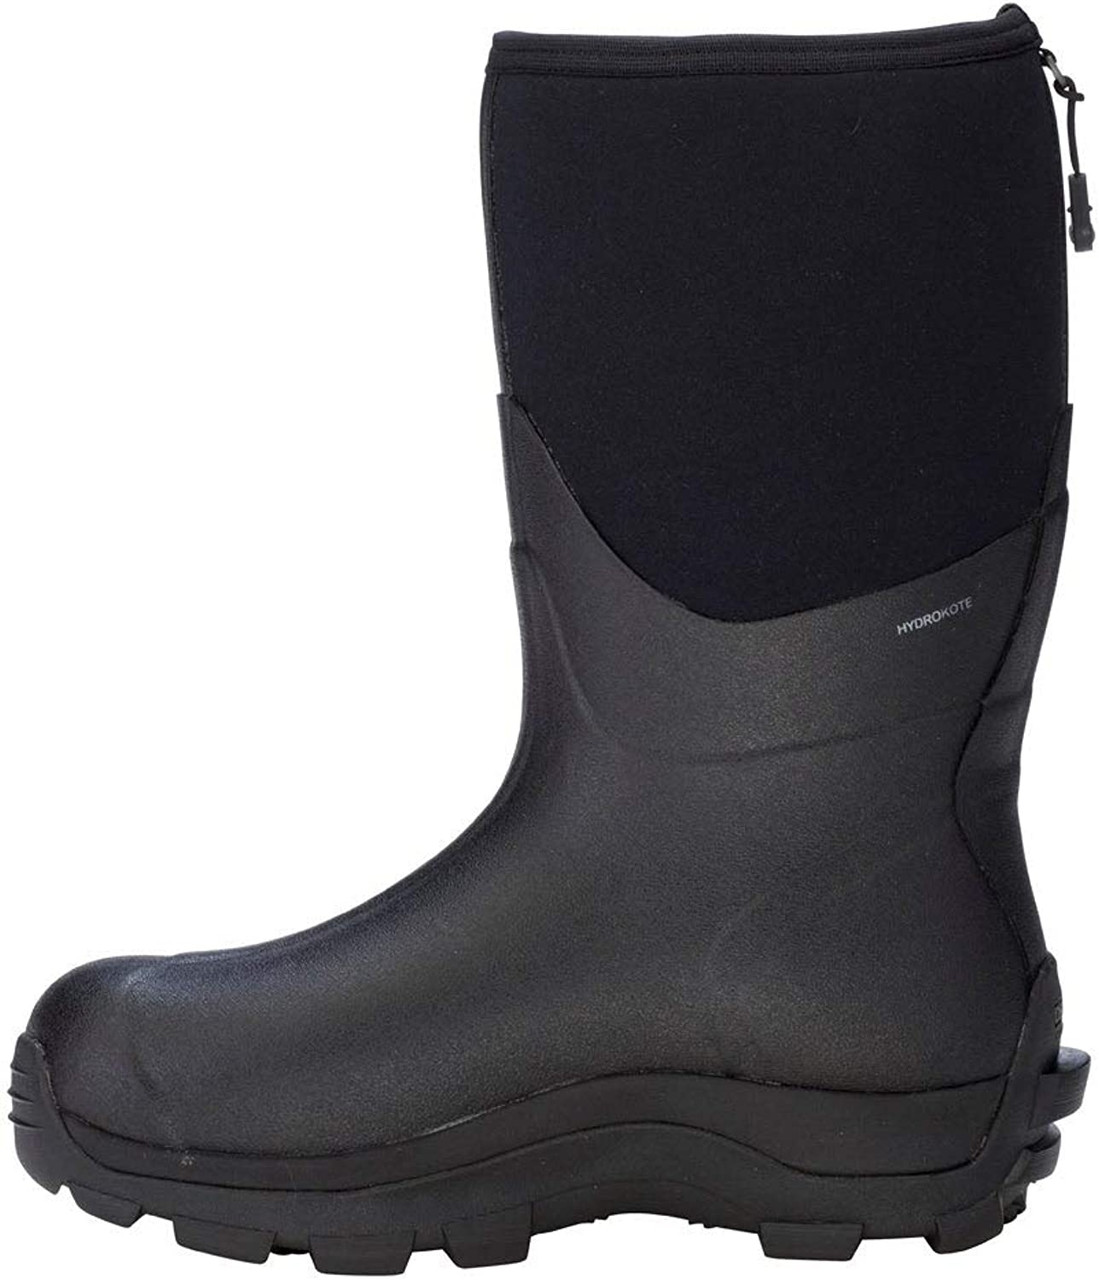 Dryshod Mens Arctic Storm Mid Pull On Boots Mid Calf Black/Grey Size 12